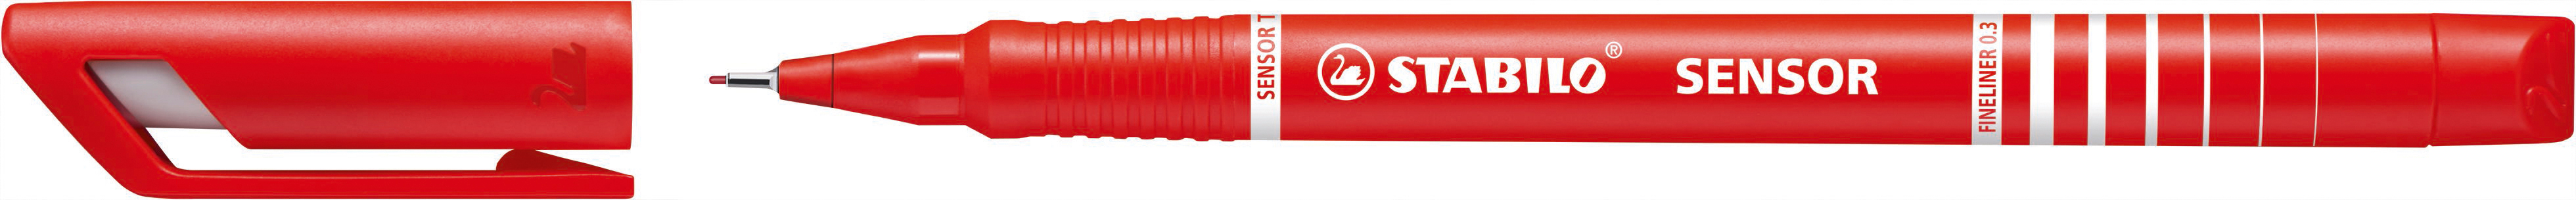 STABILO Stylo Fibre sensor 0,3mm (F) 189/40 rouge rouge